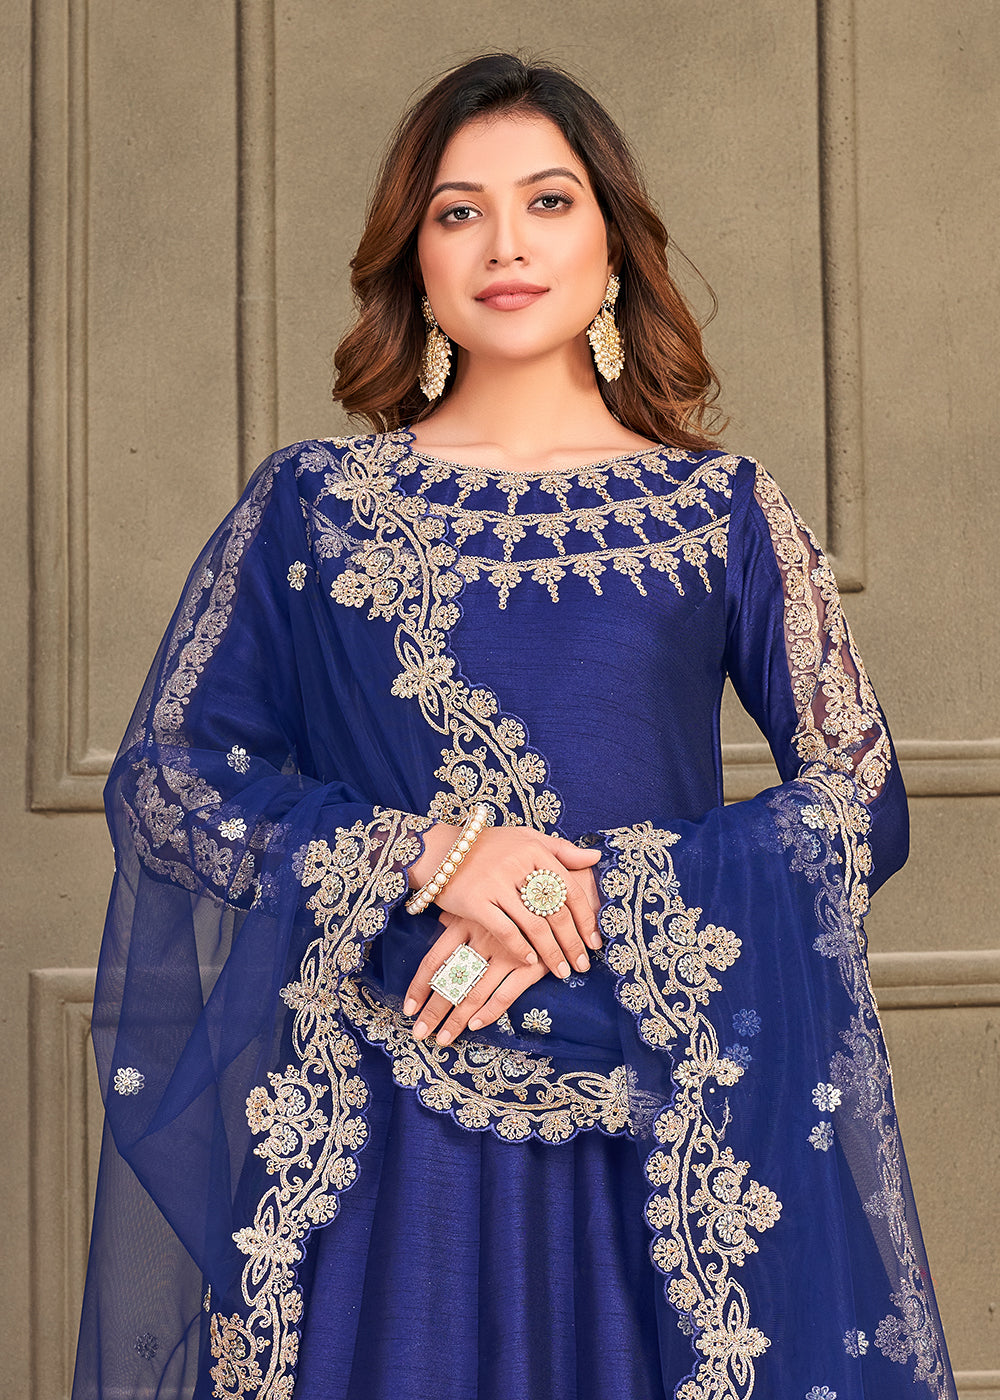 Buy Now Stylish Royal Blue Art Silk Floor Length Anarkali Dress Online in USA, UK, Australia, New Zealand, Canada & Worldwide at Empress Clothing. 